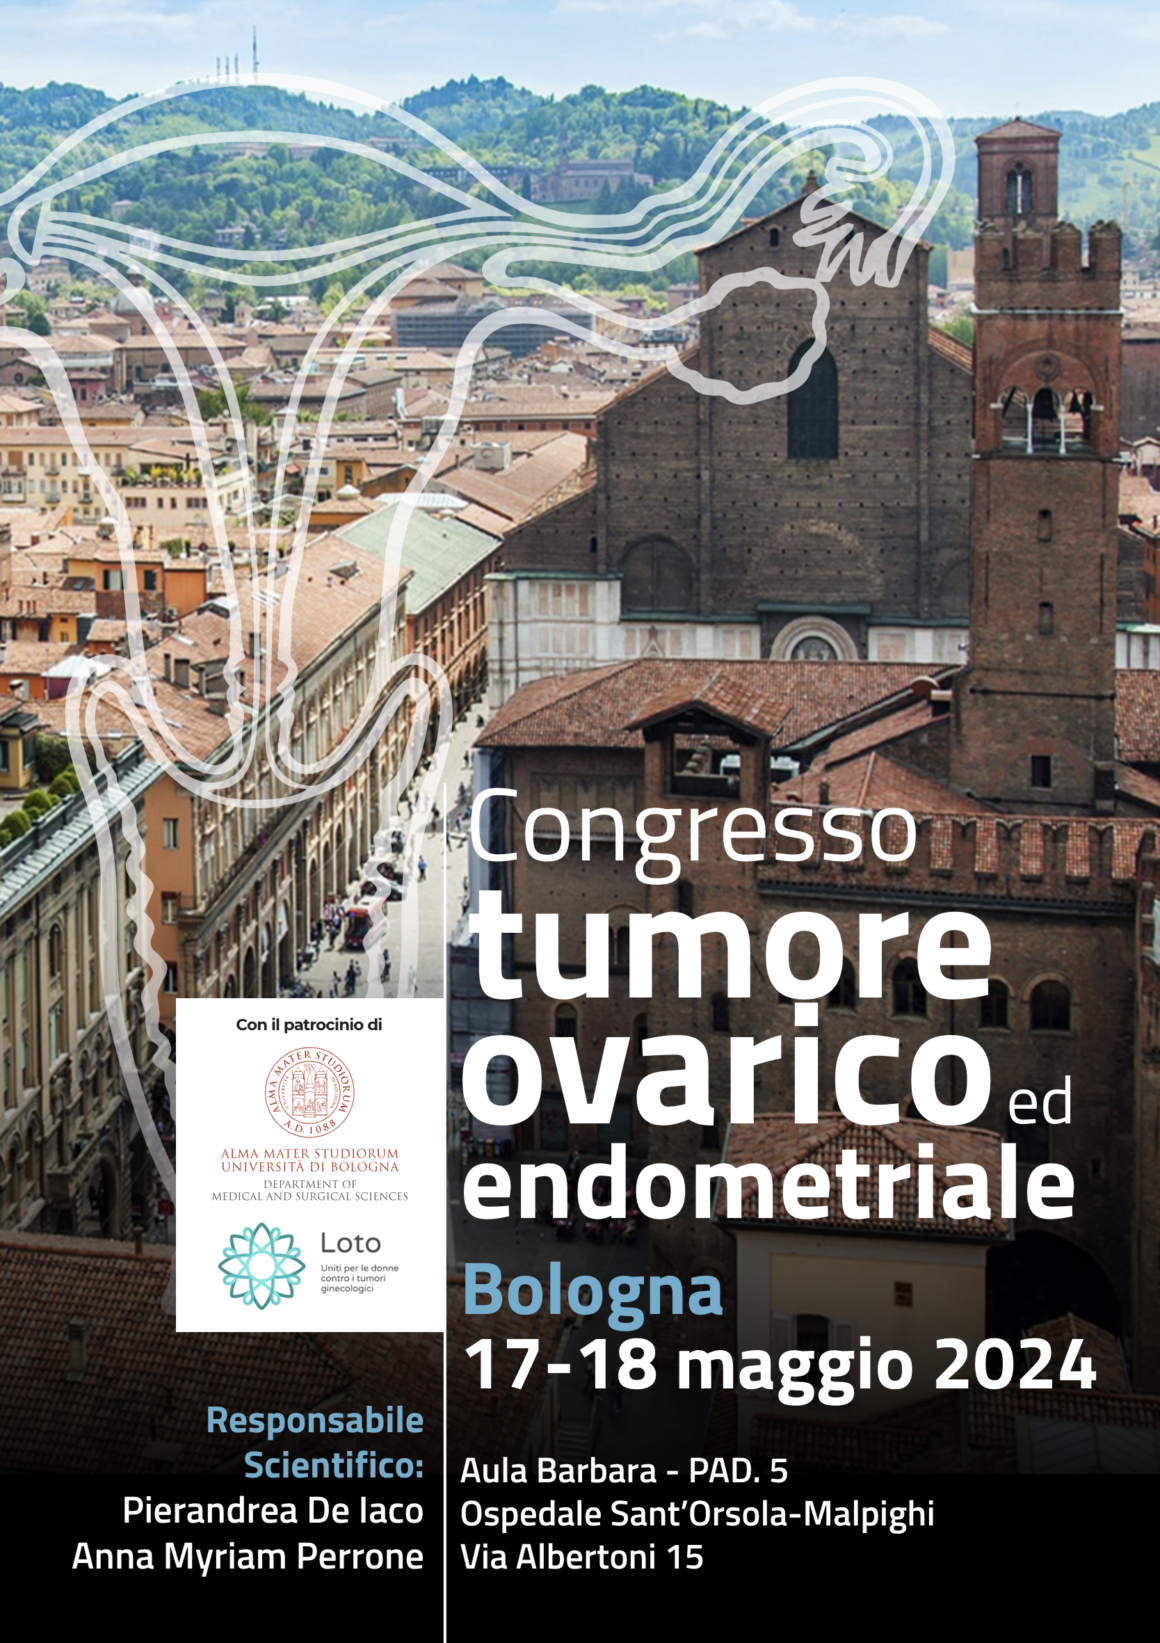 17-18 May 2024 Bologna – Ovarian Cancer and Endometrial Congress